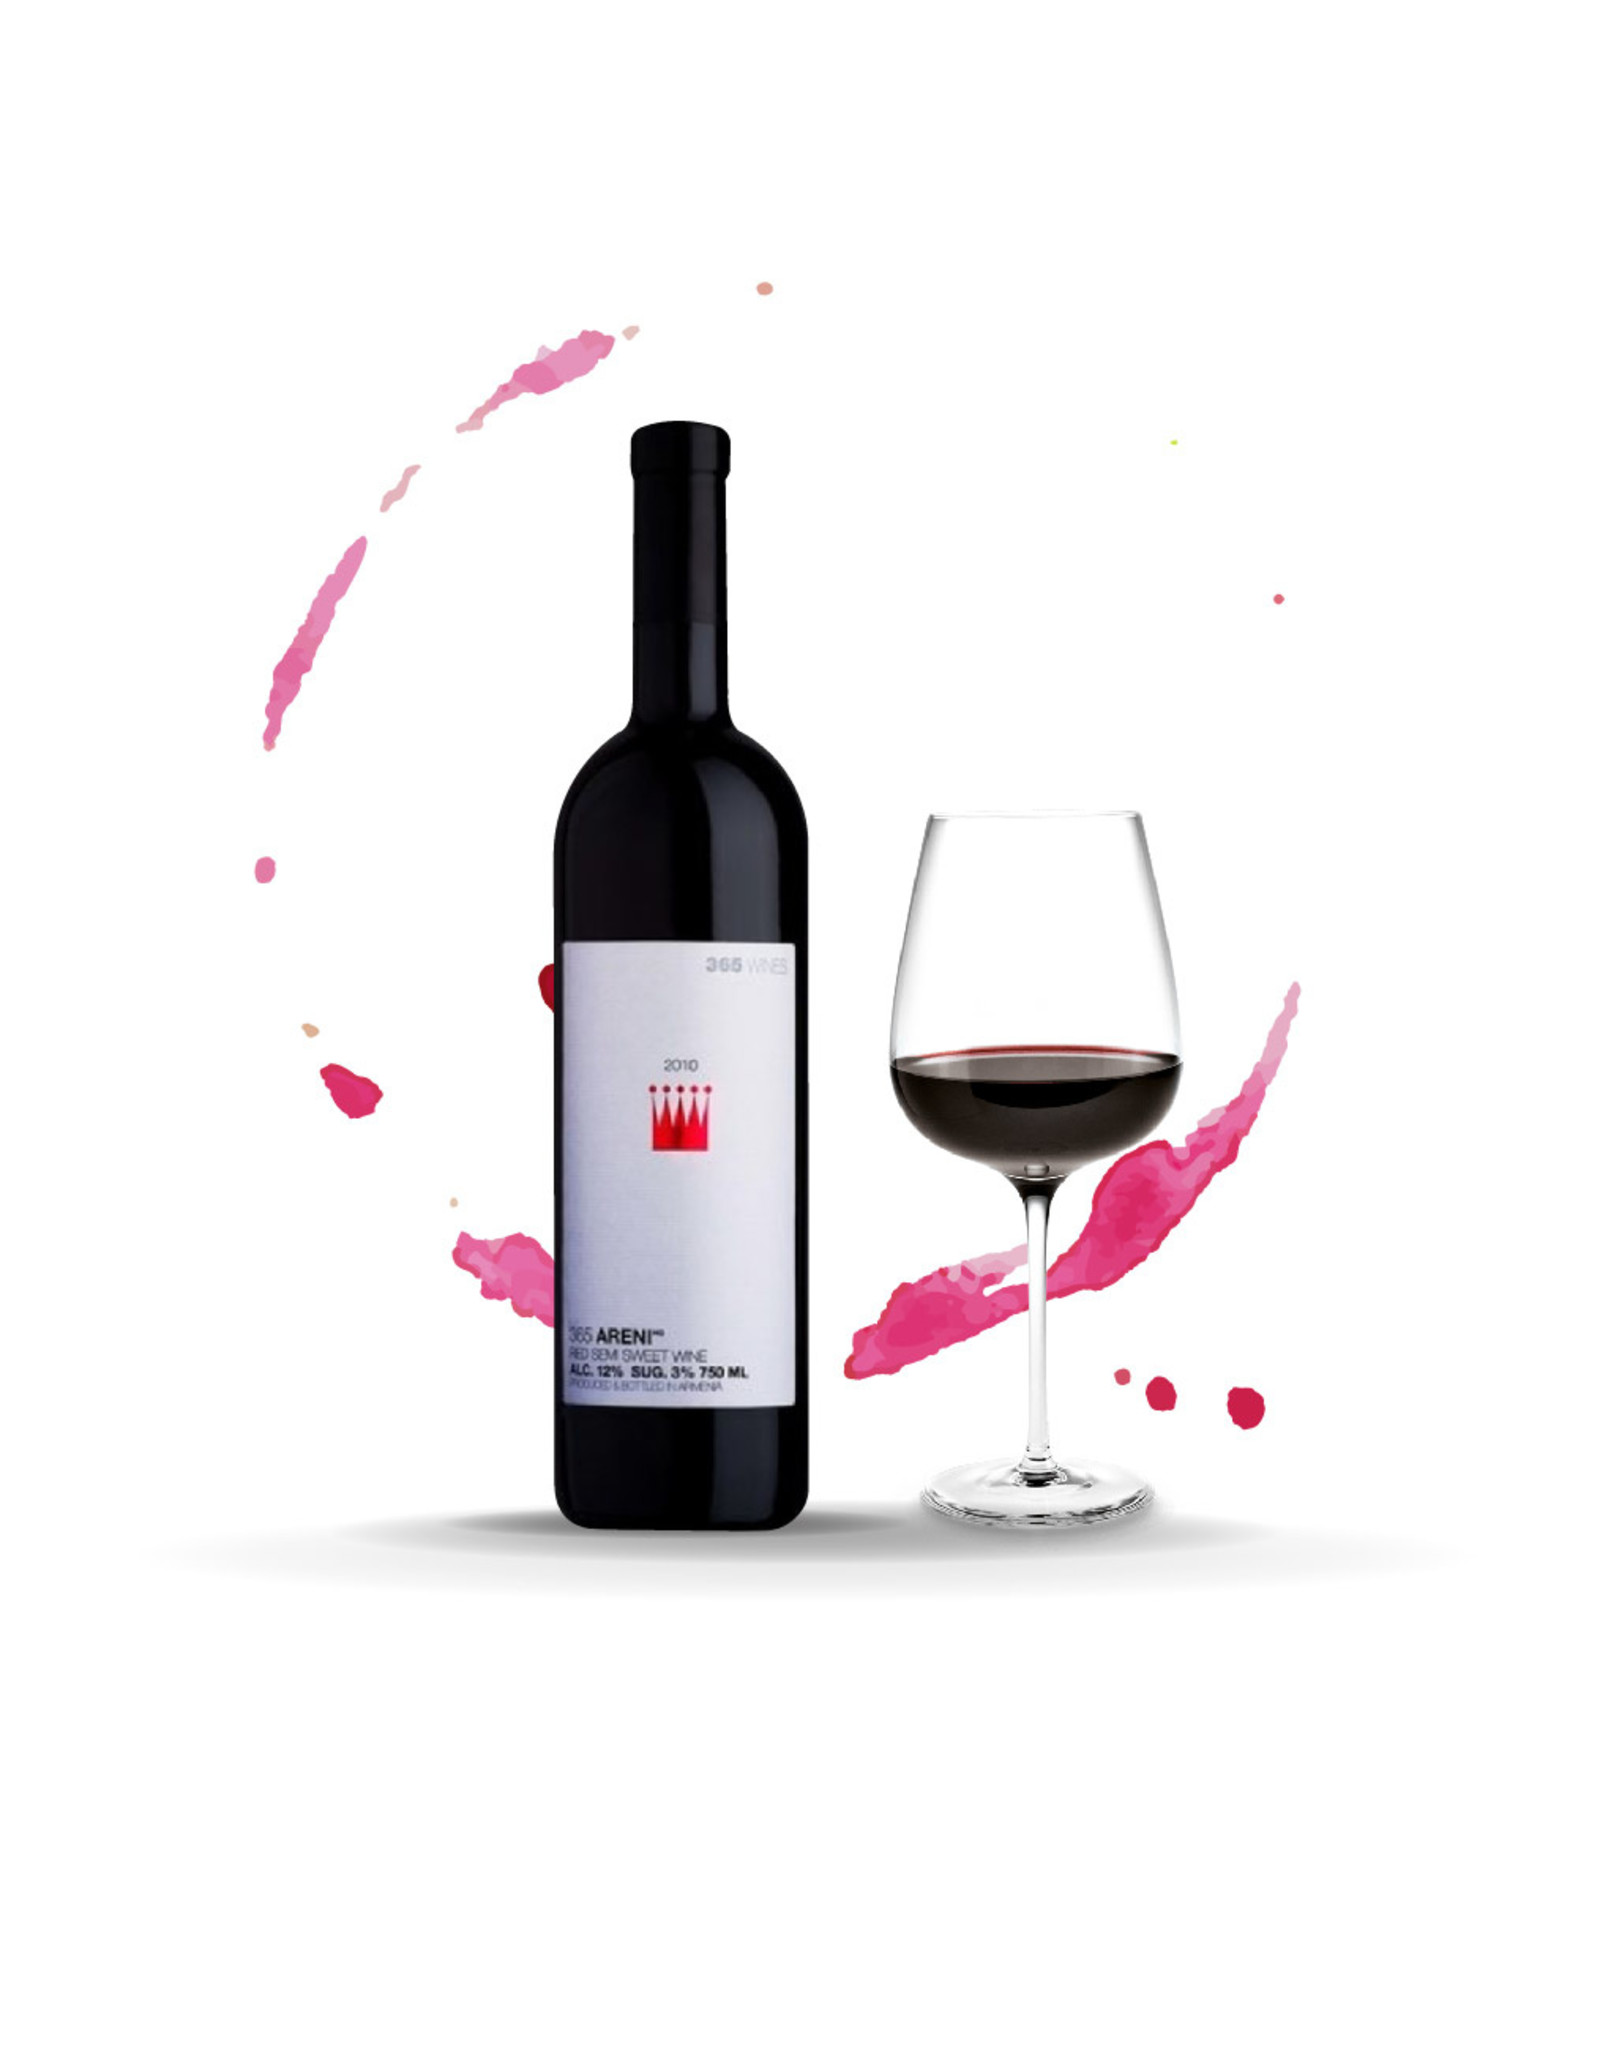 Gevorkian Winery 2017 Gevorkian 365 Areni semi- sweet red wine